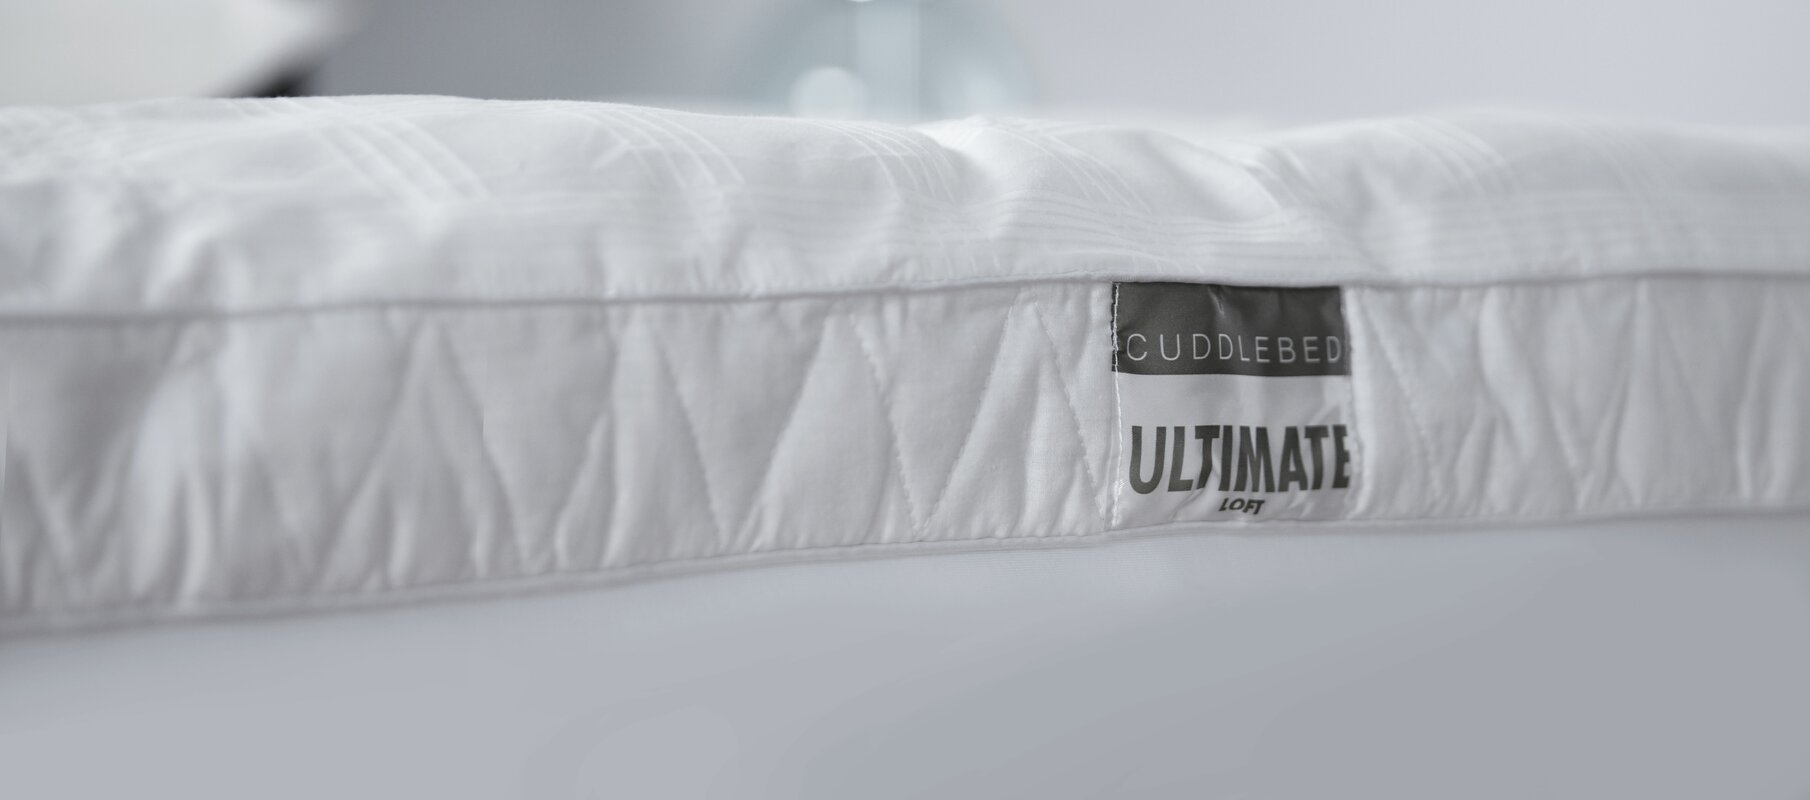 ultimate cuddle mattress topper